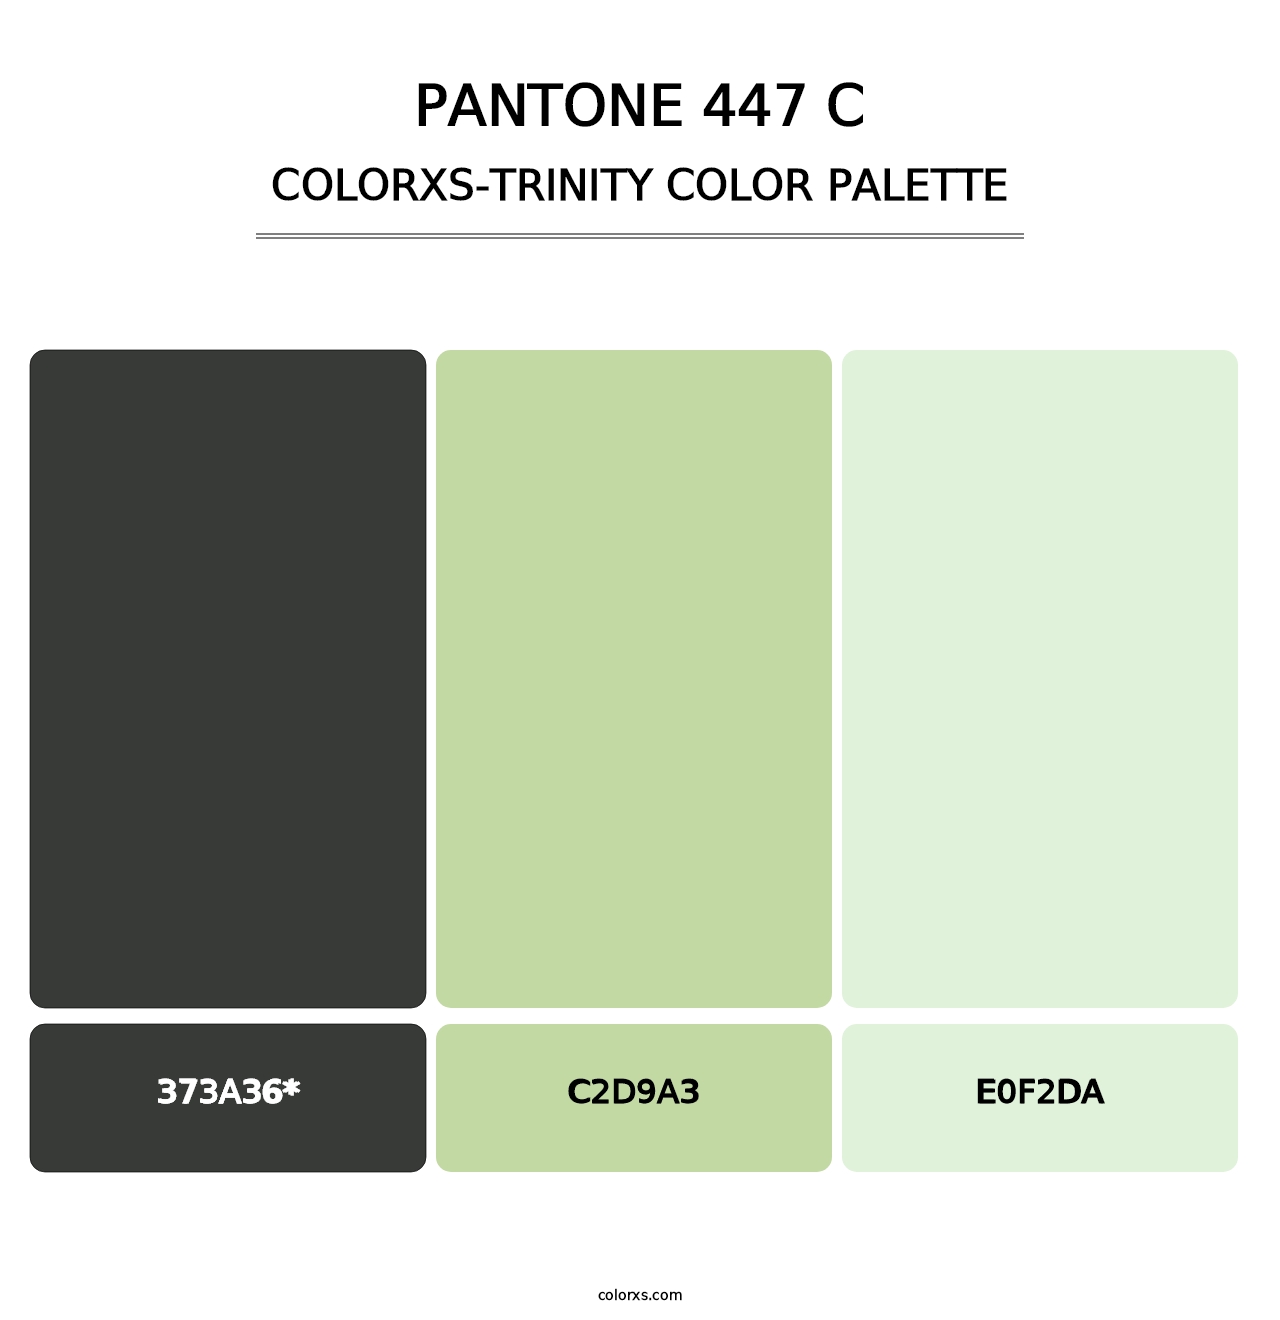 PANTONE 447 C - Colorxs Trinity Palette